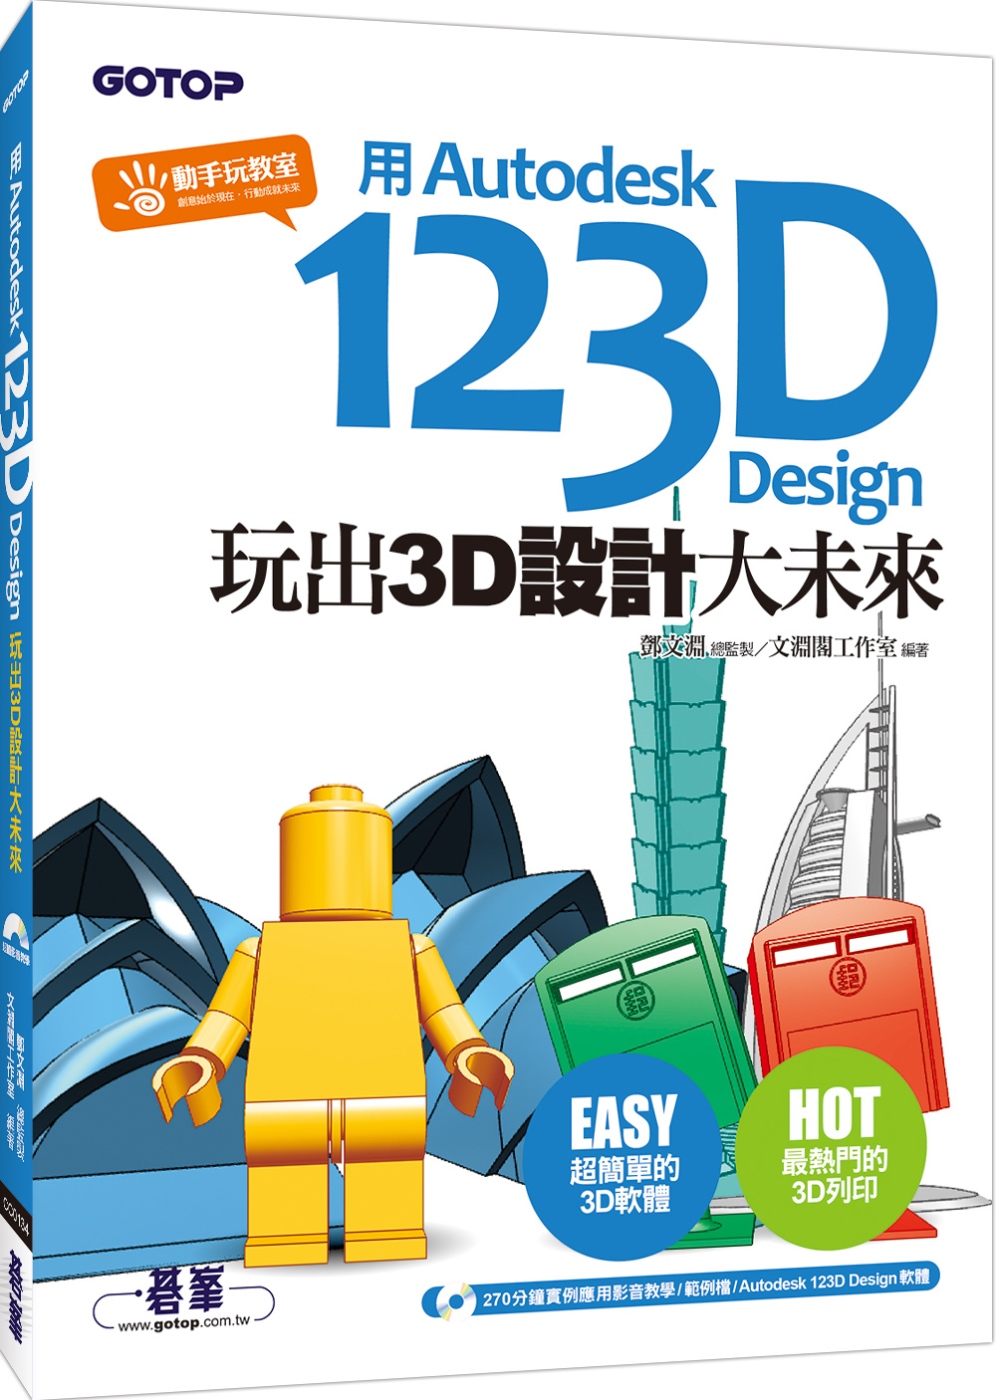 用Autodesk 123D Design玩出3D設計大未來...